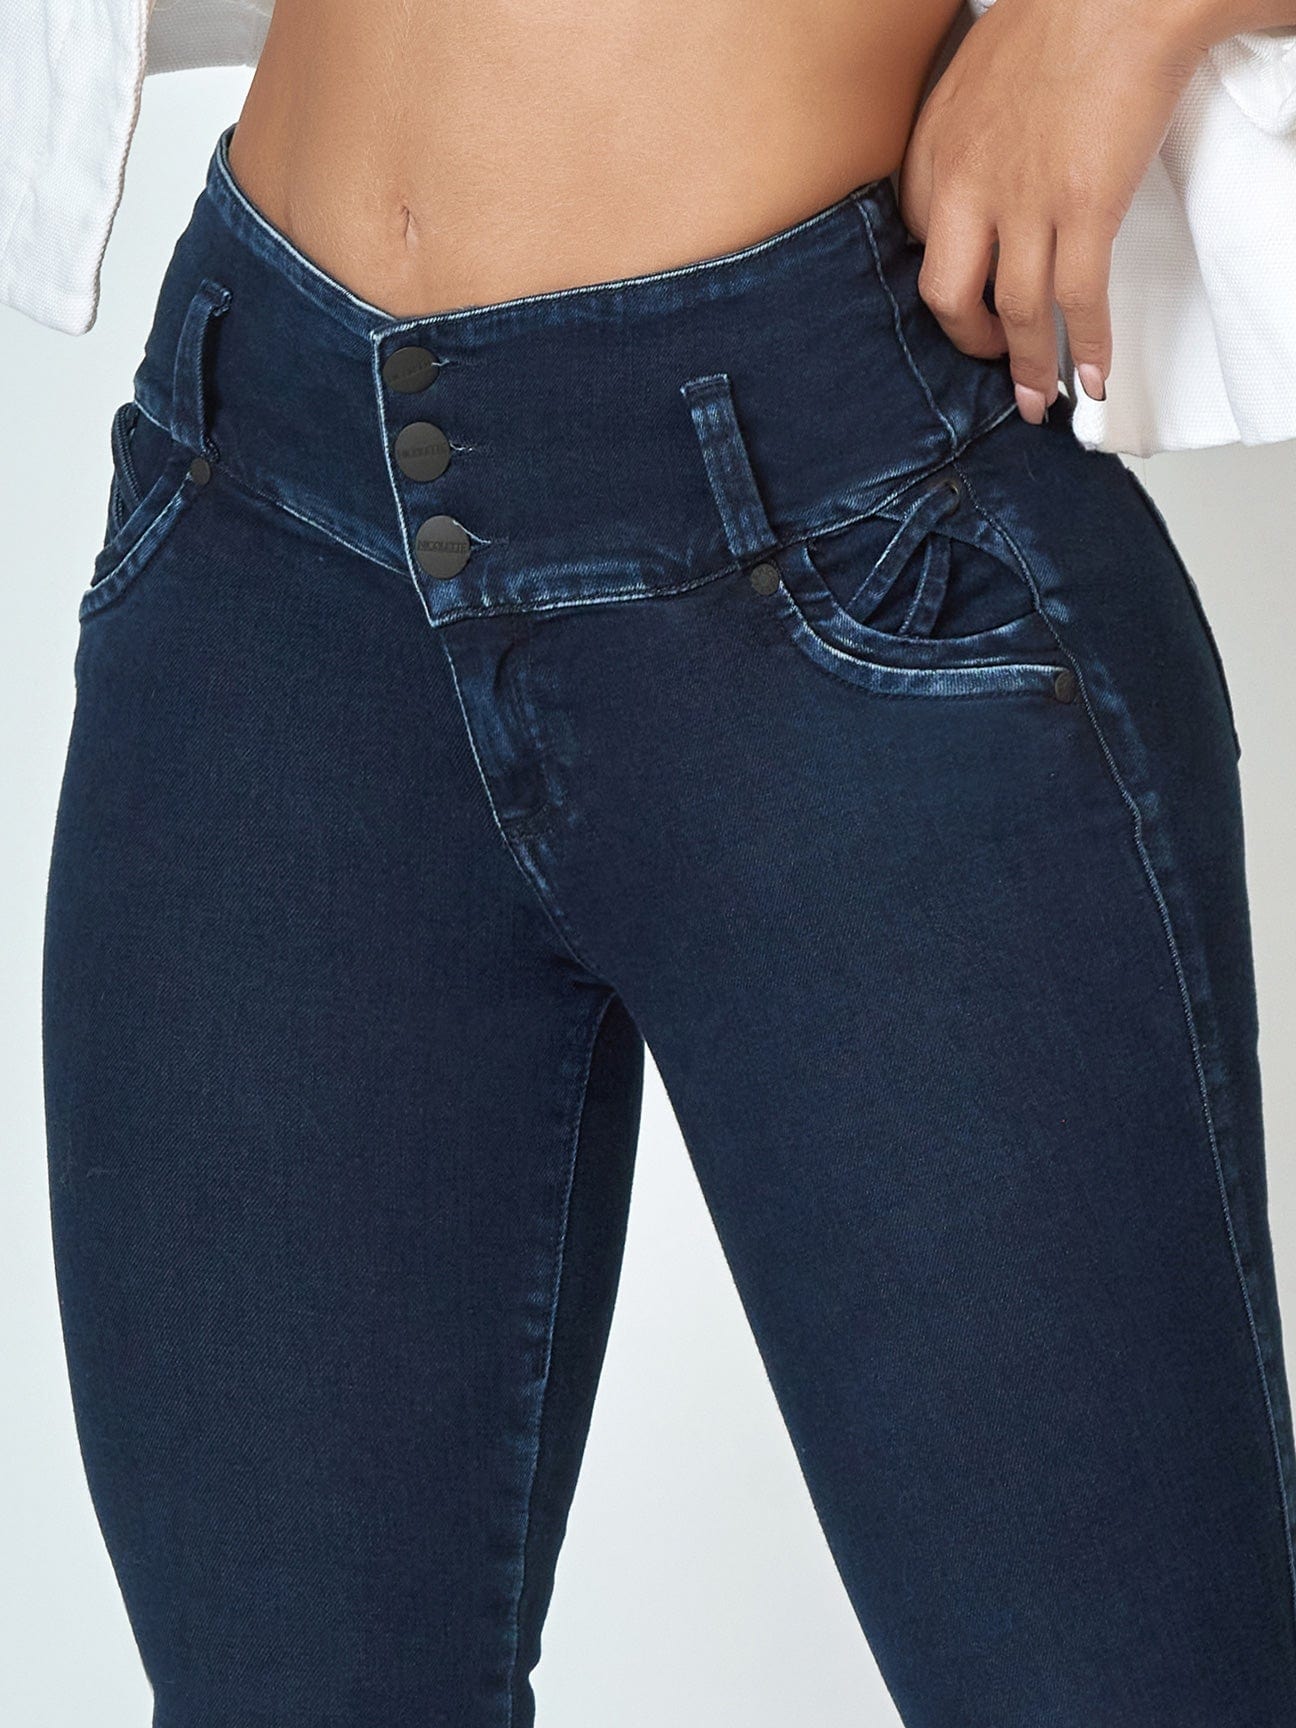 Carmen Tummy Control Jeans front waist view.